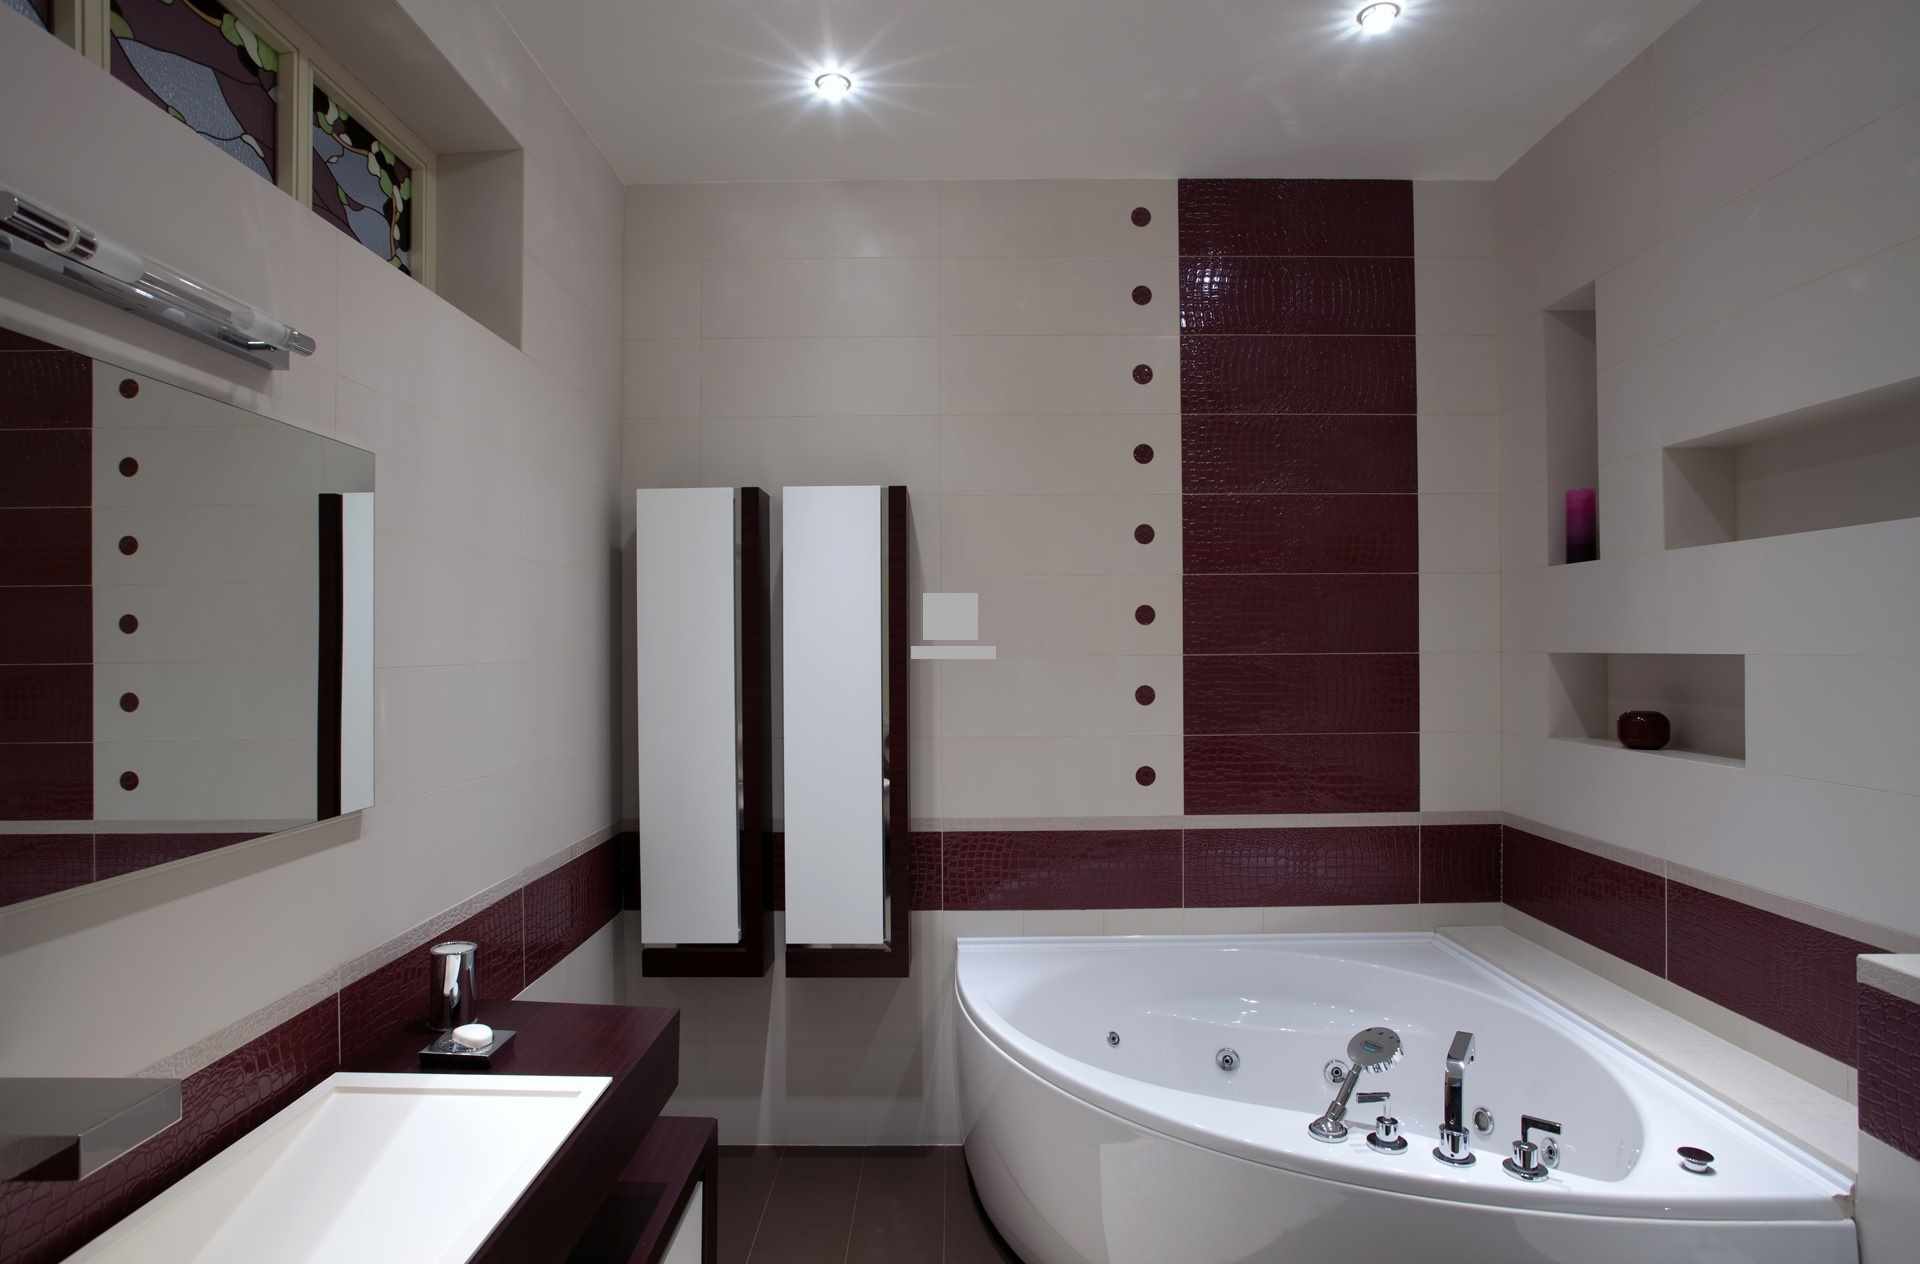 idea of ​​a beautiful bathroom decor with corner bath